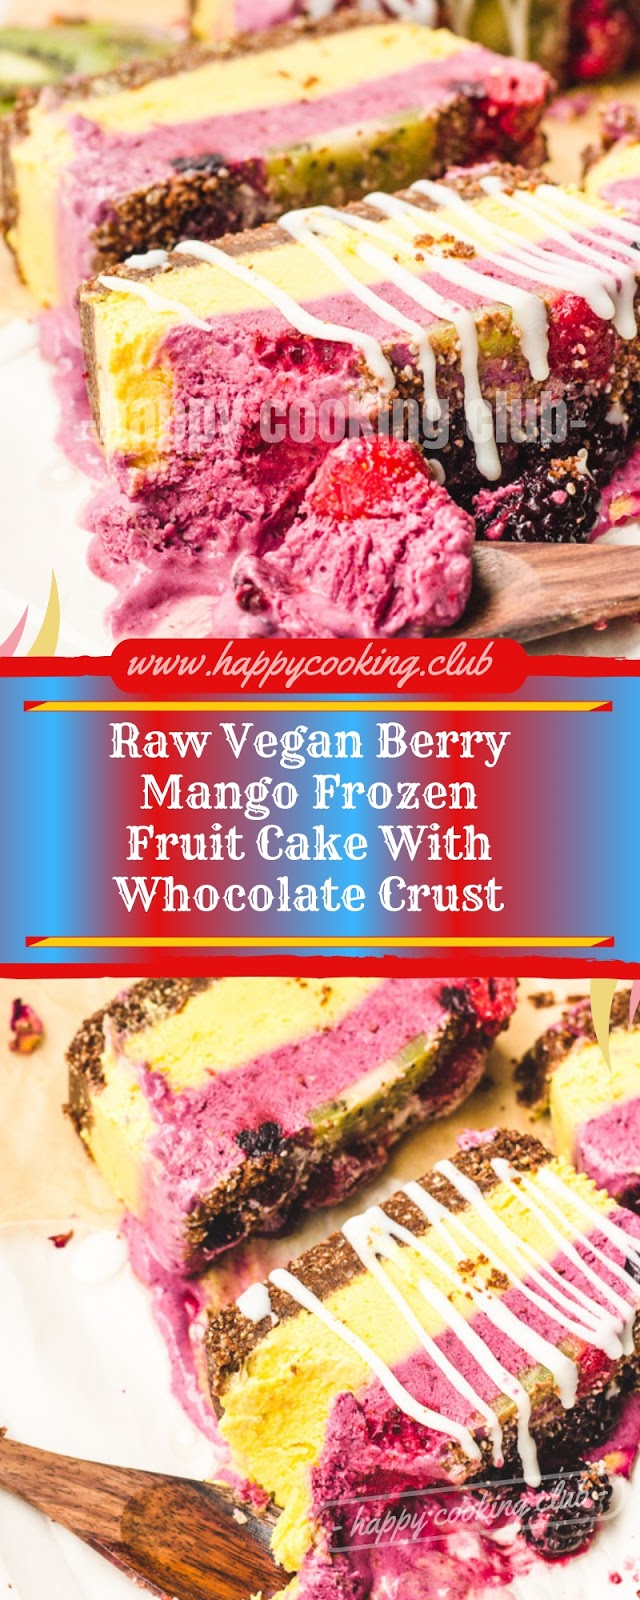 Raw Vegan Berry Mango Frozen Fruit Cake With Whocolate Crust